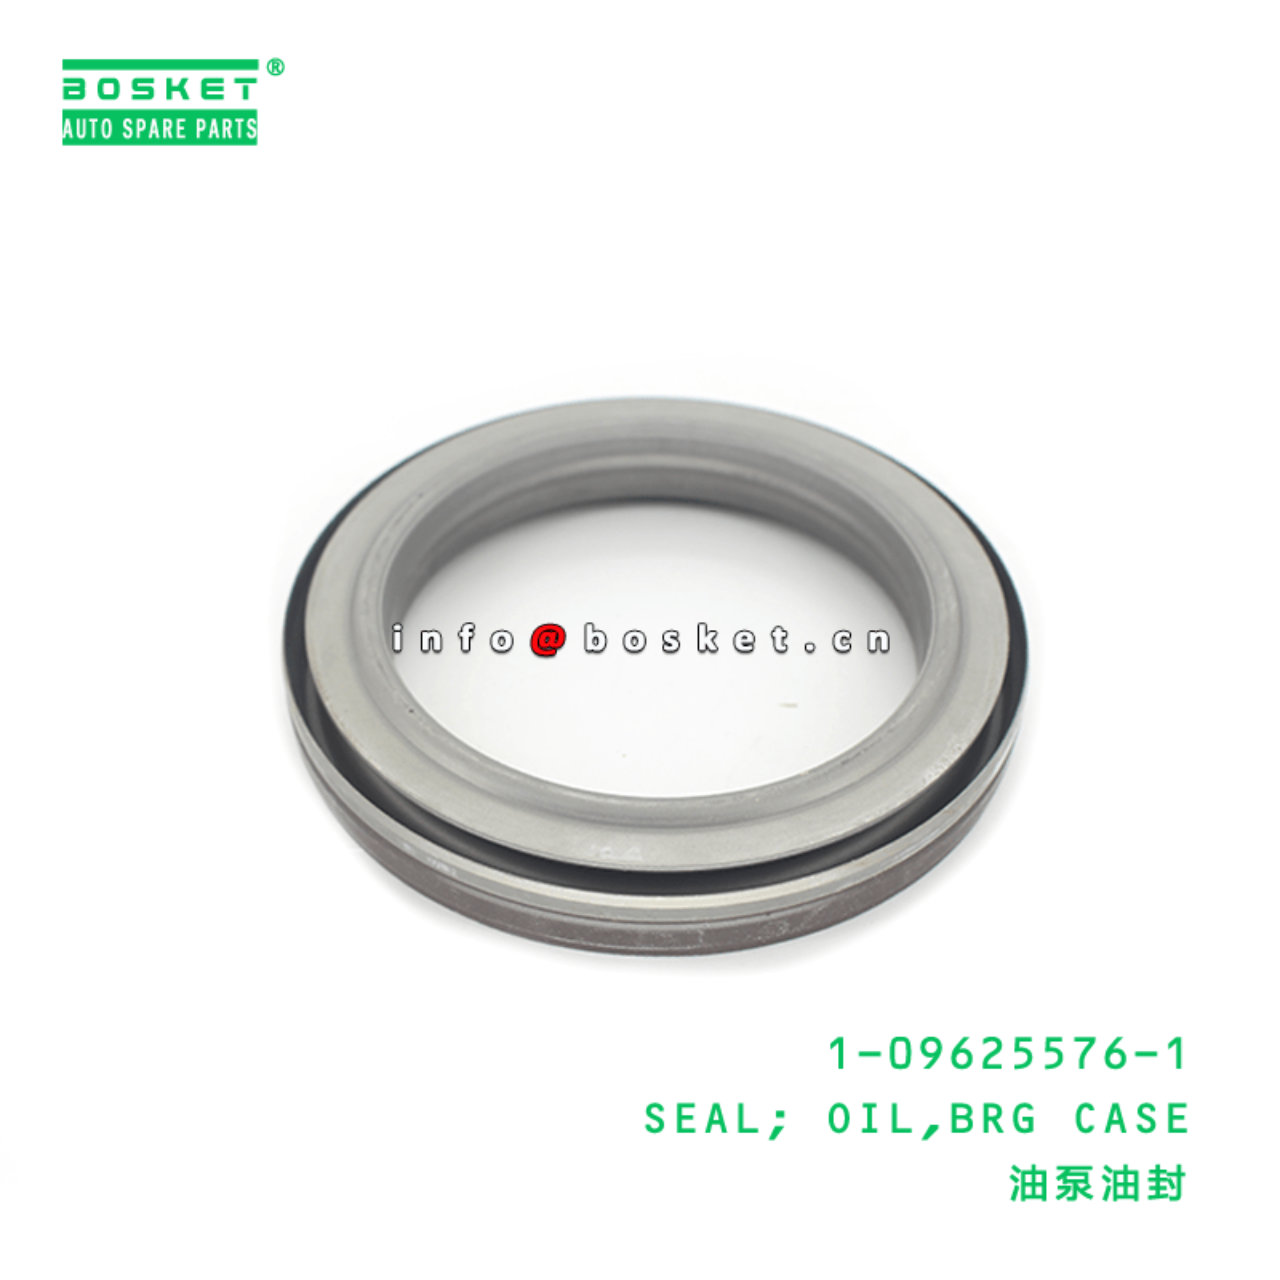  1-09625576-1 Bearing Case Oil SEAL 1096255761 Suitable for ISUZU FTR